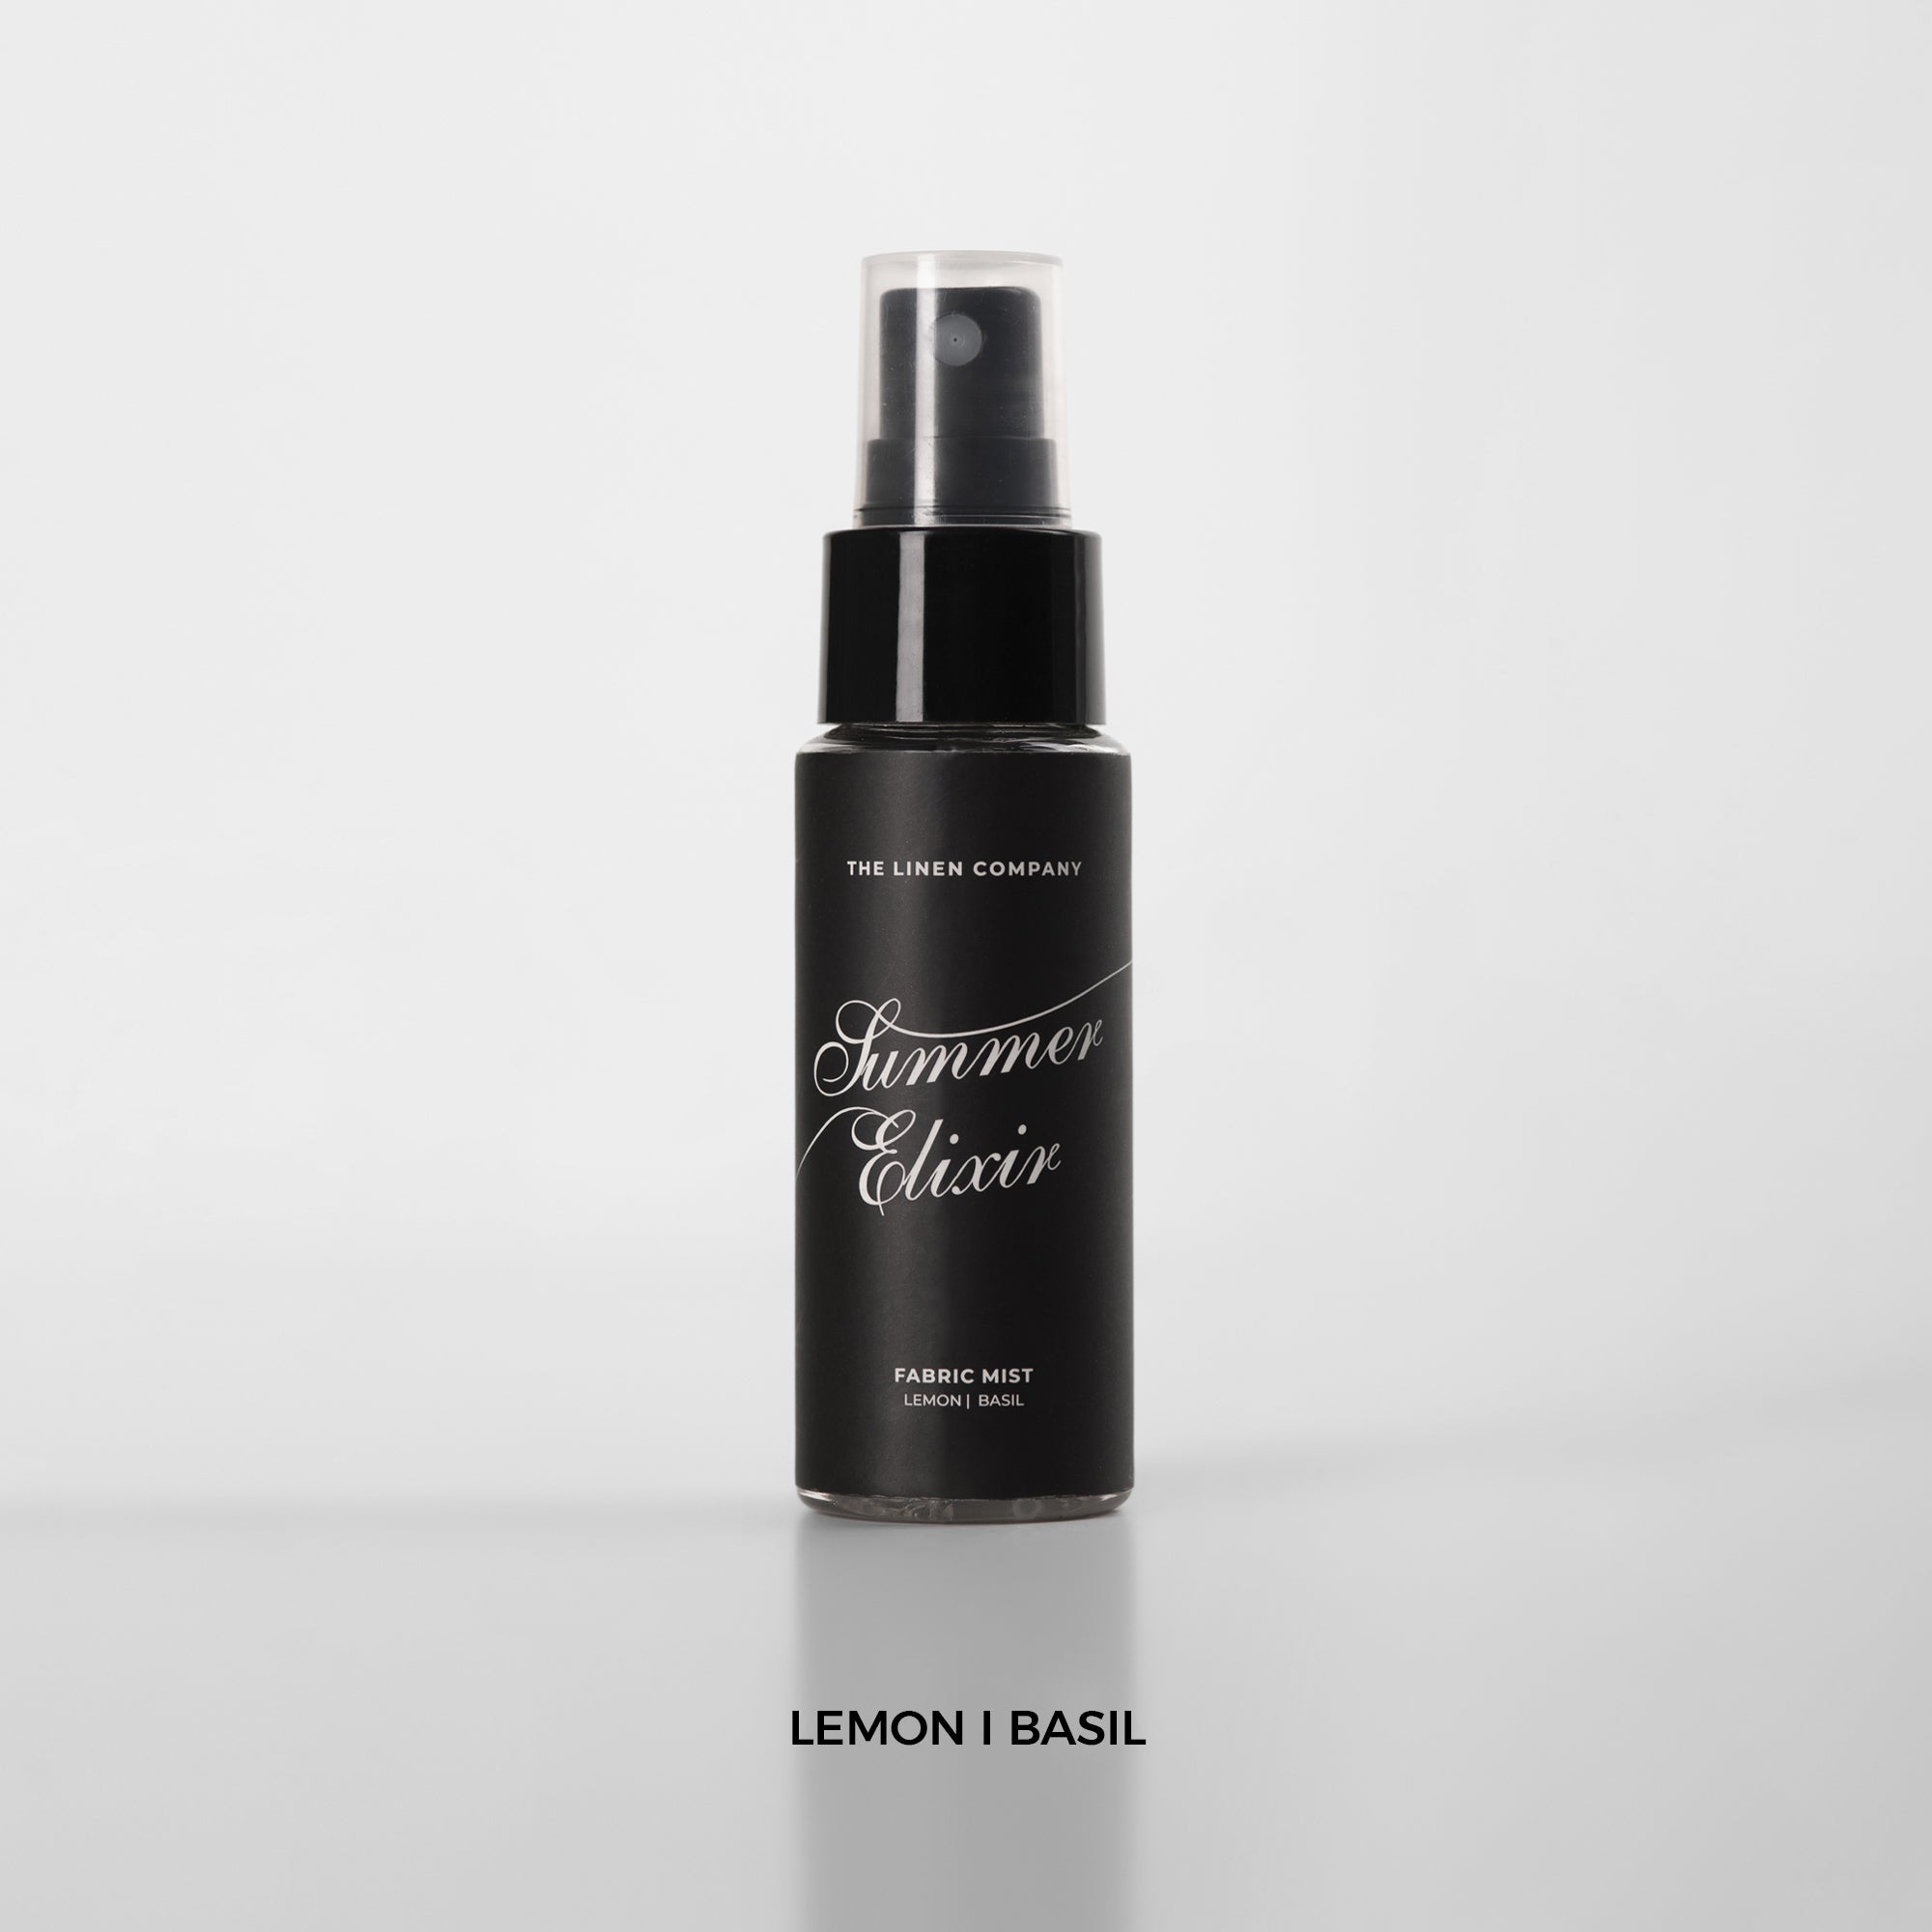 The Linen Company Accessories 50ml Summer Elixir Fabric Mist Summer Elixir Fabric Mist | Aromatherapy | The Linen Company